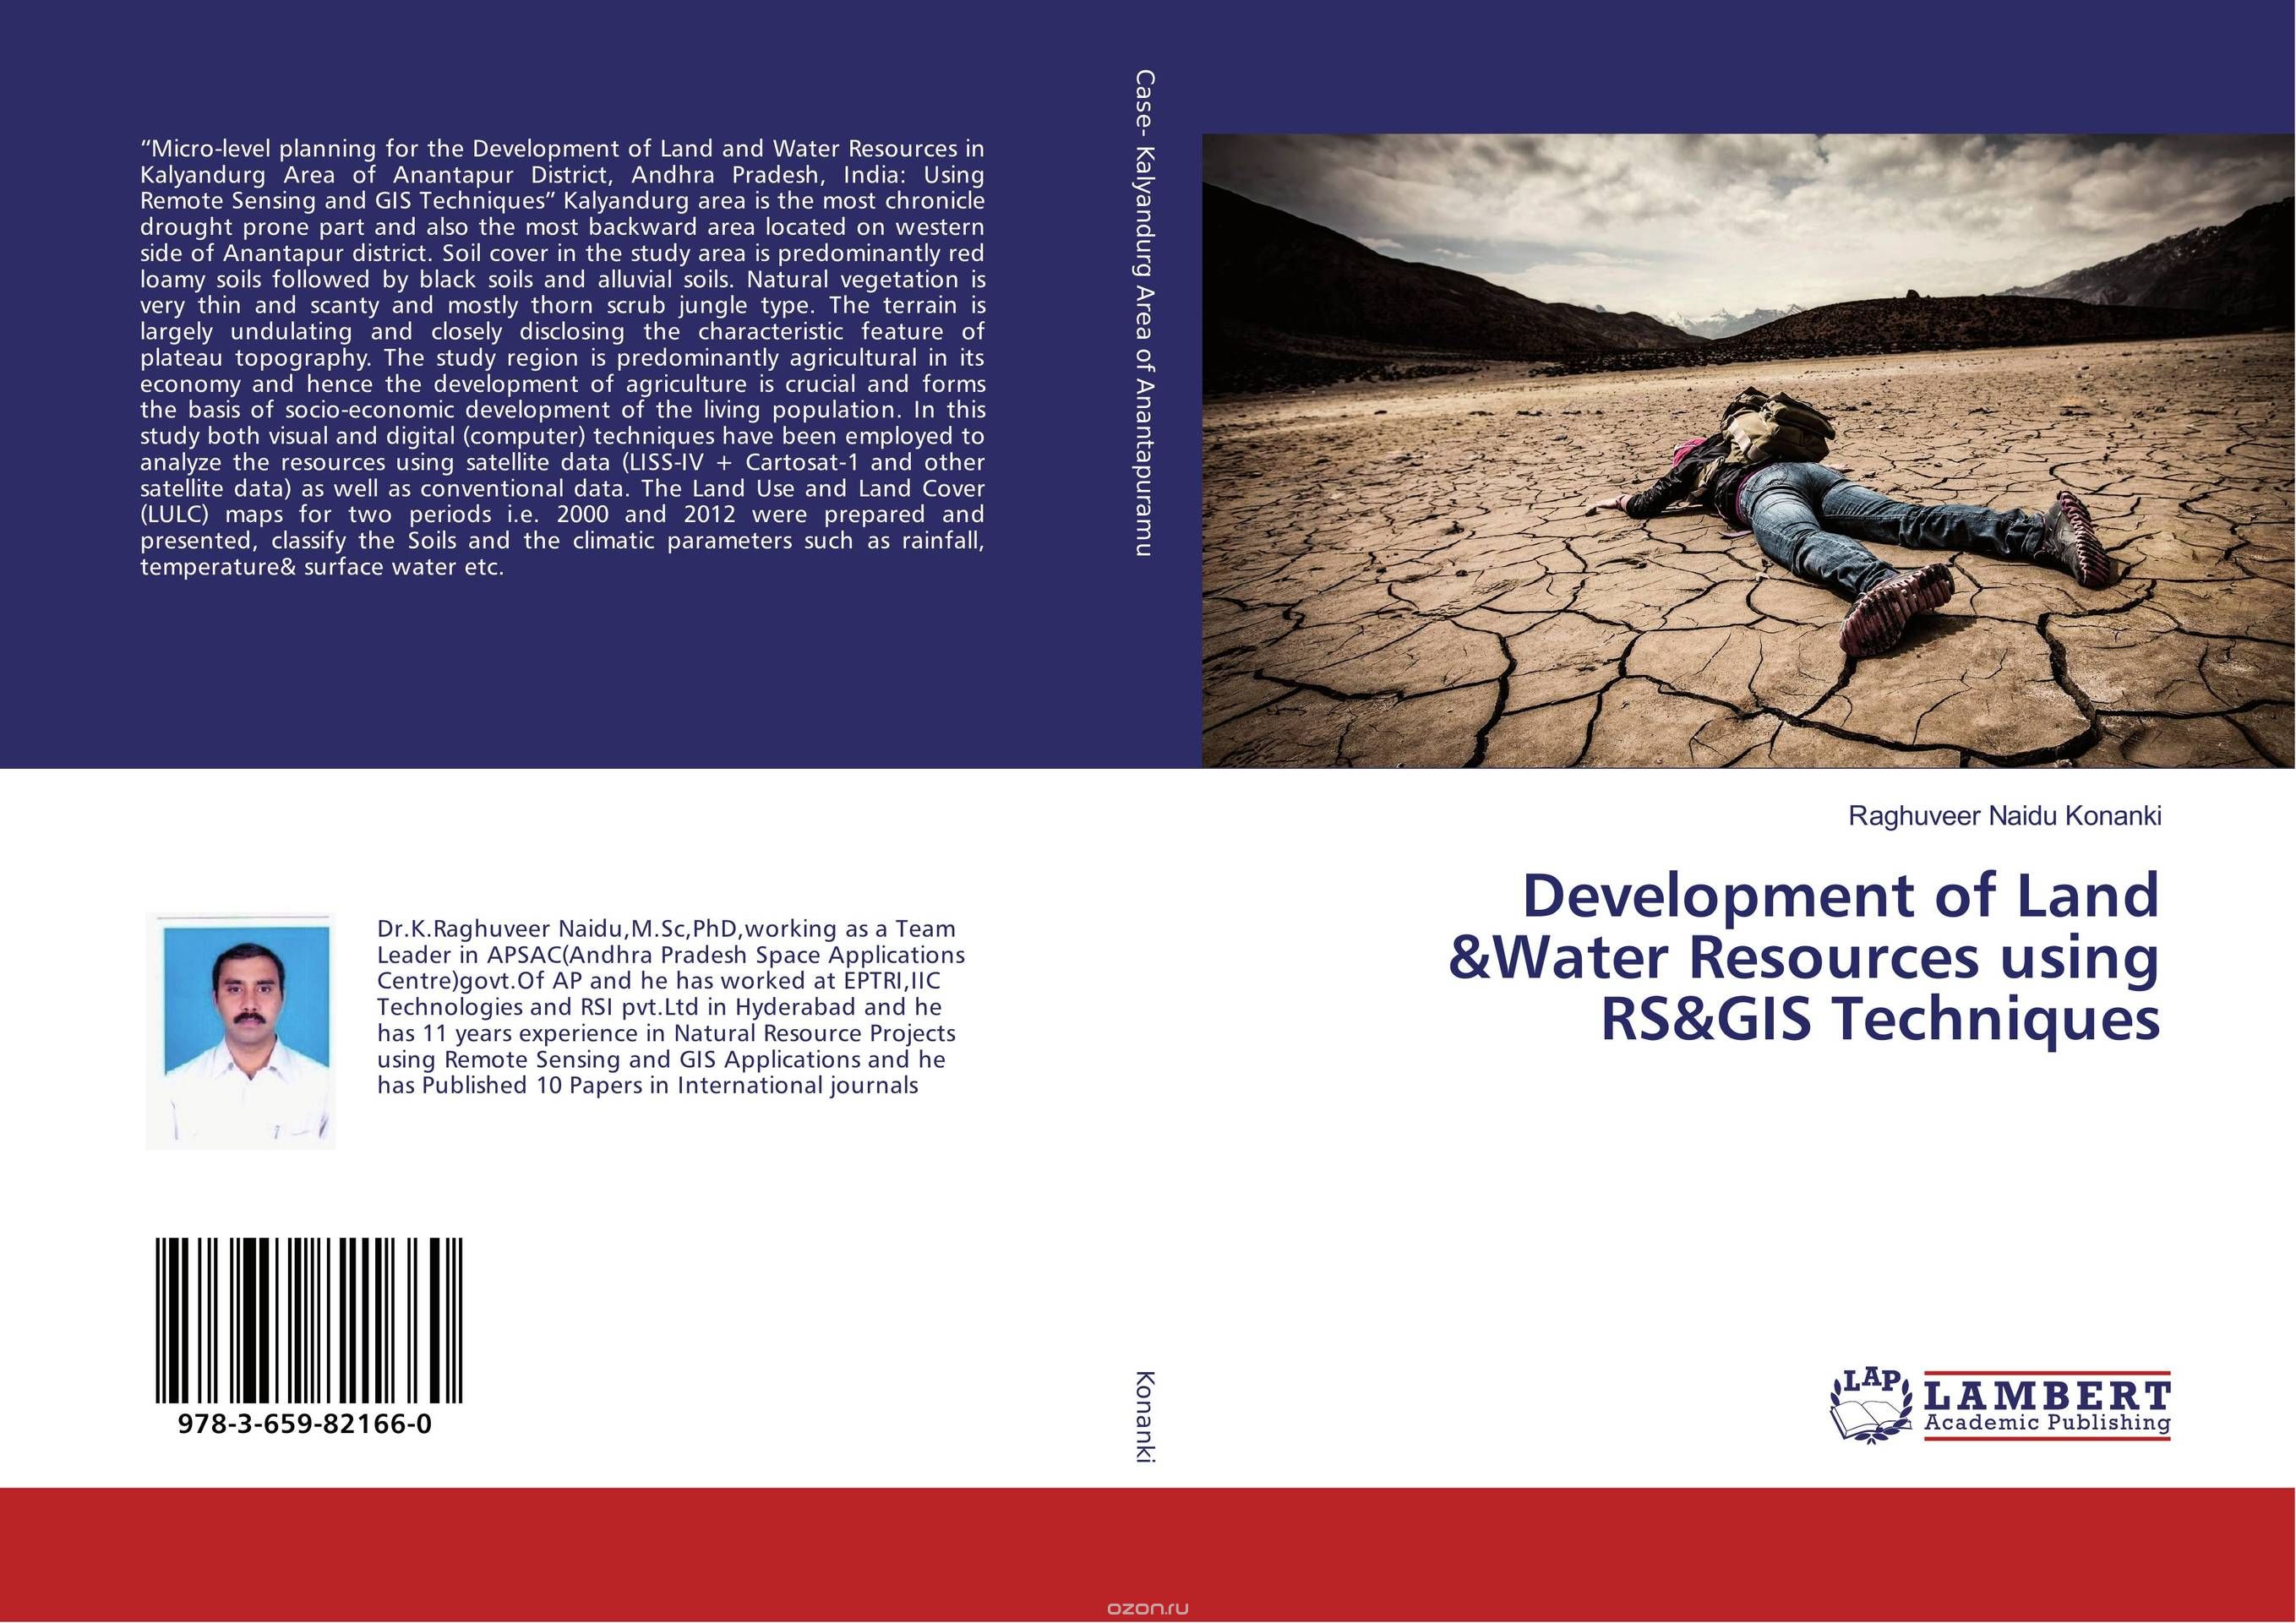 Скачать книгу "Development of Land &Water Resources using RS&GIS Techniques"